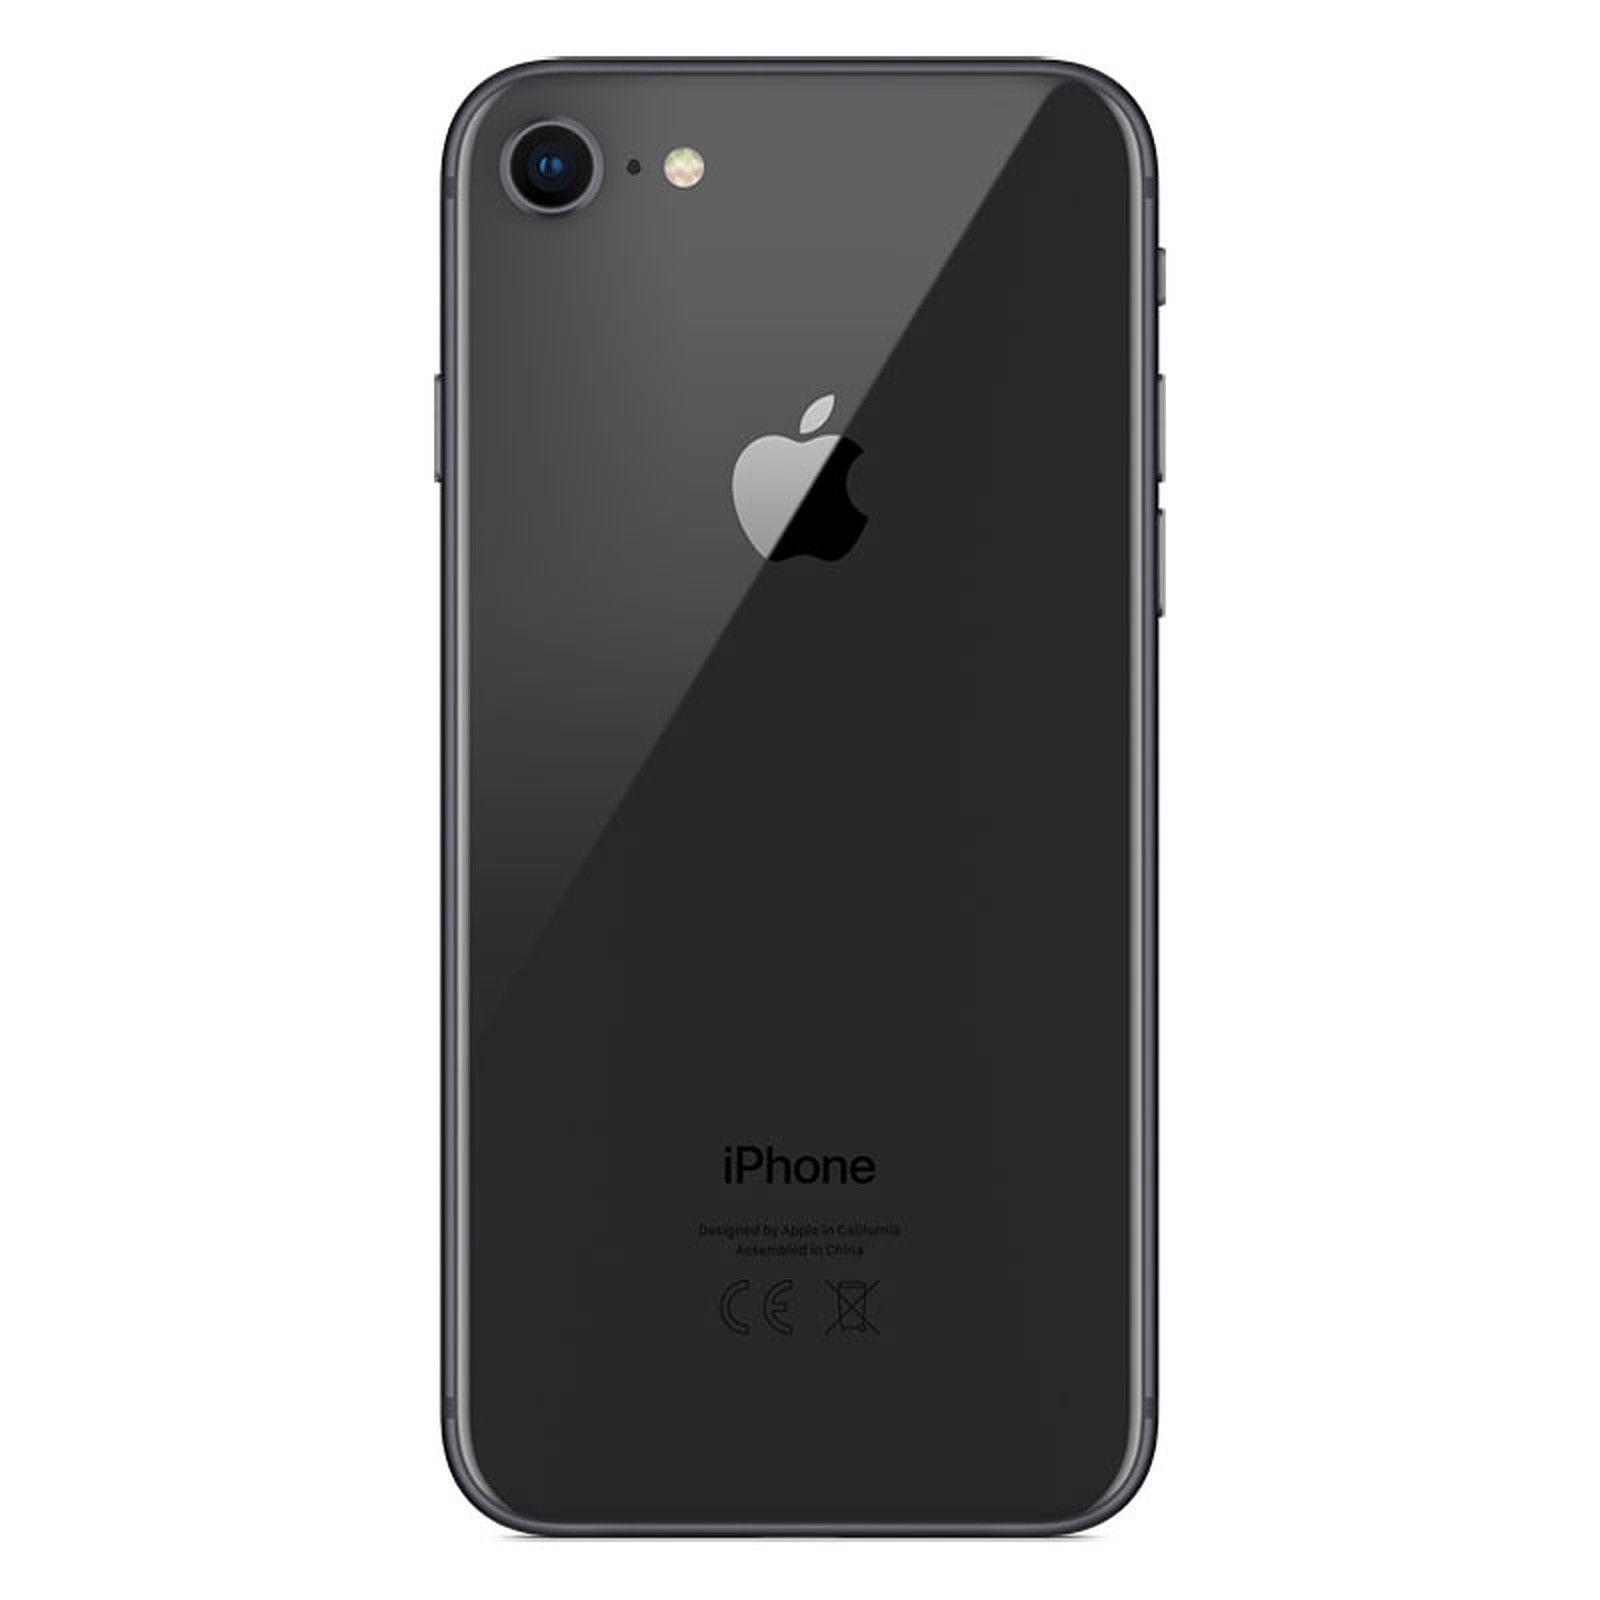 iPhone 8 GB schwarz 128 REFURBISHED 128 APPLE (*) GB